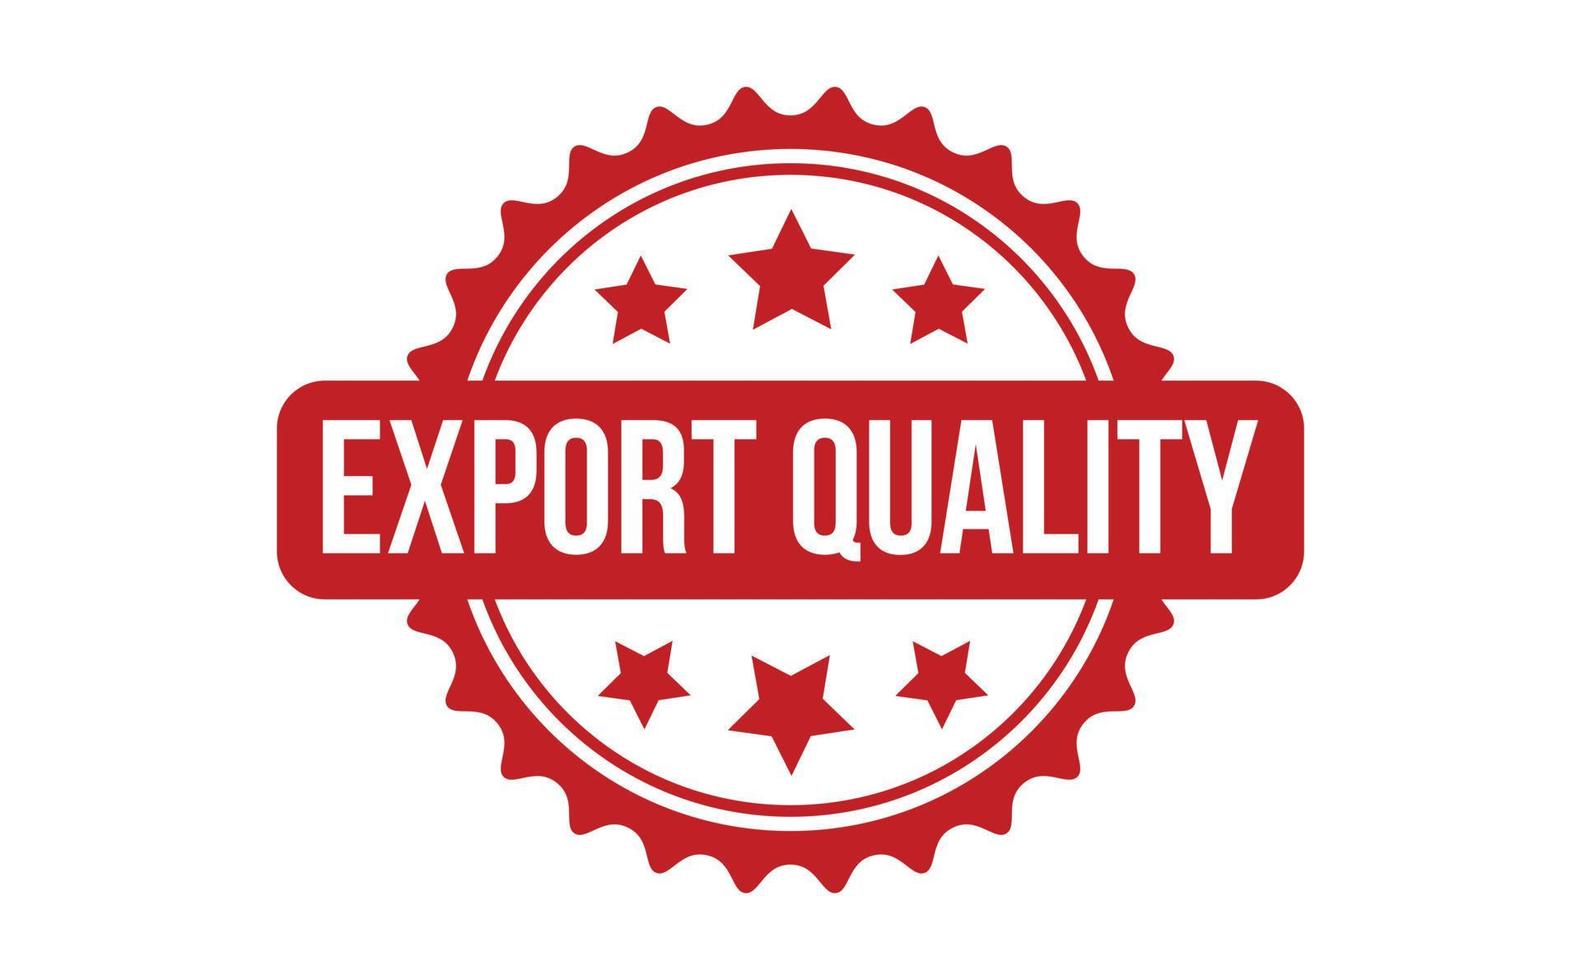 Export Qualität Gummi Briefmarke. rot Export Qualität Gummi Grunge Briefmarke Siegel Vektor Illustration - - Vektor